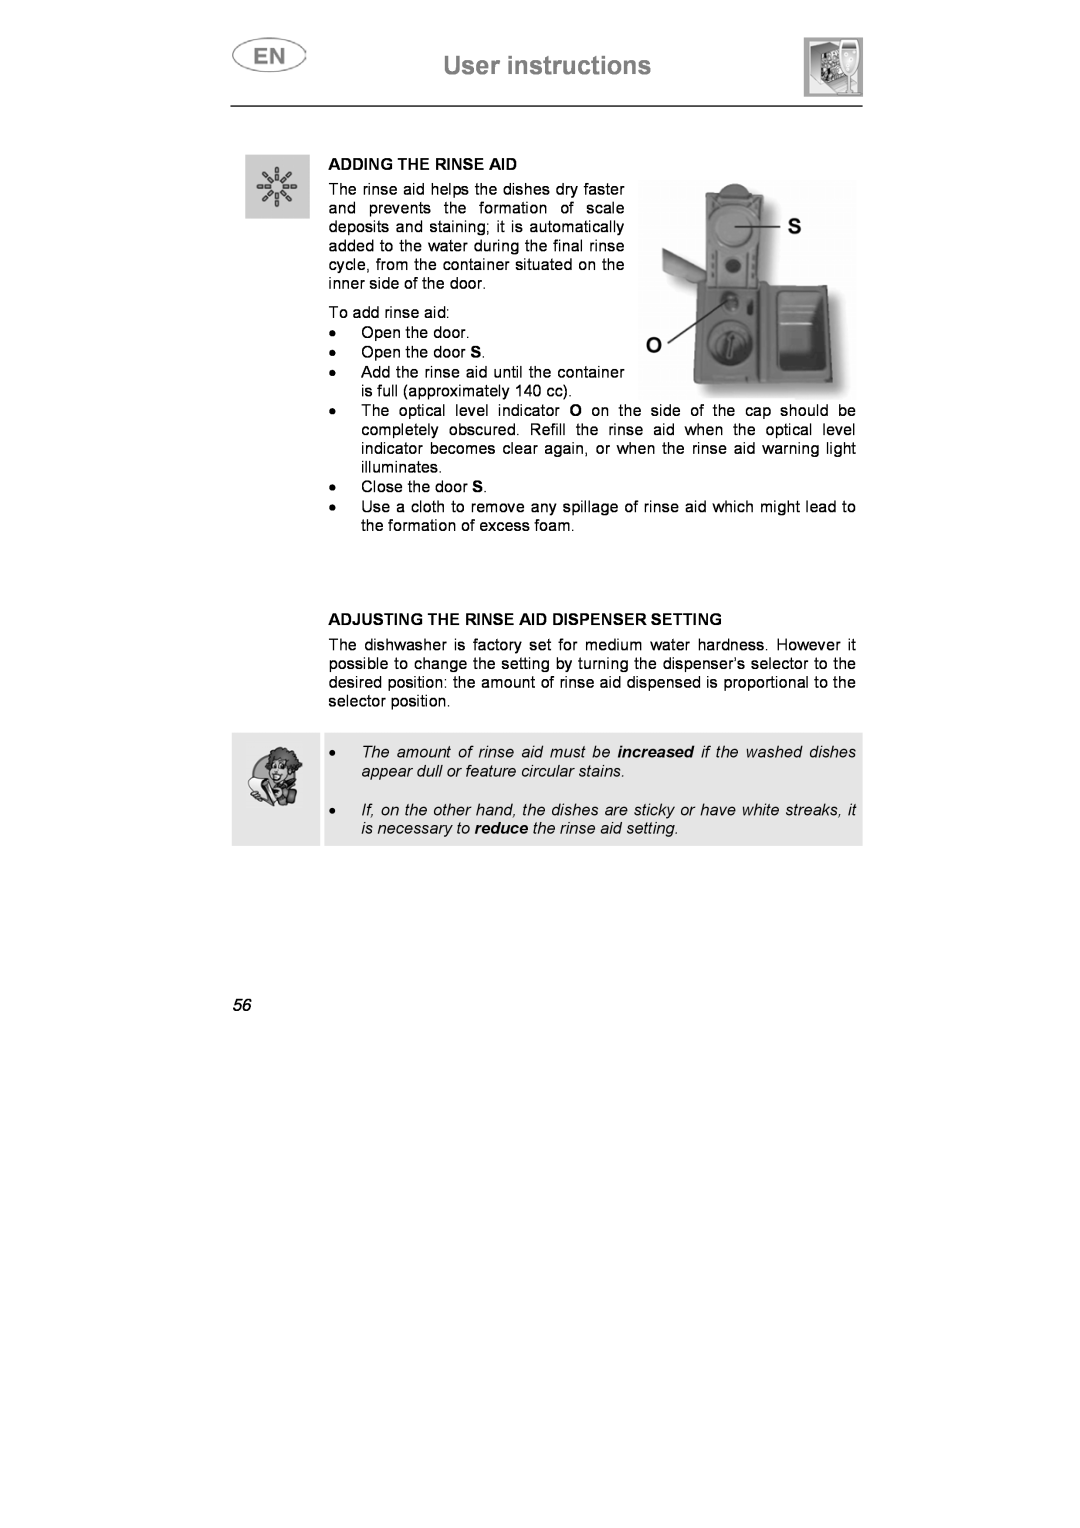 Smeg DI912 instruction manual Adding The Rinse Aid, Adjusting The Rinse Aid Dispenser Setting, User instructions 